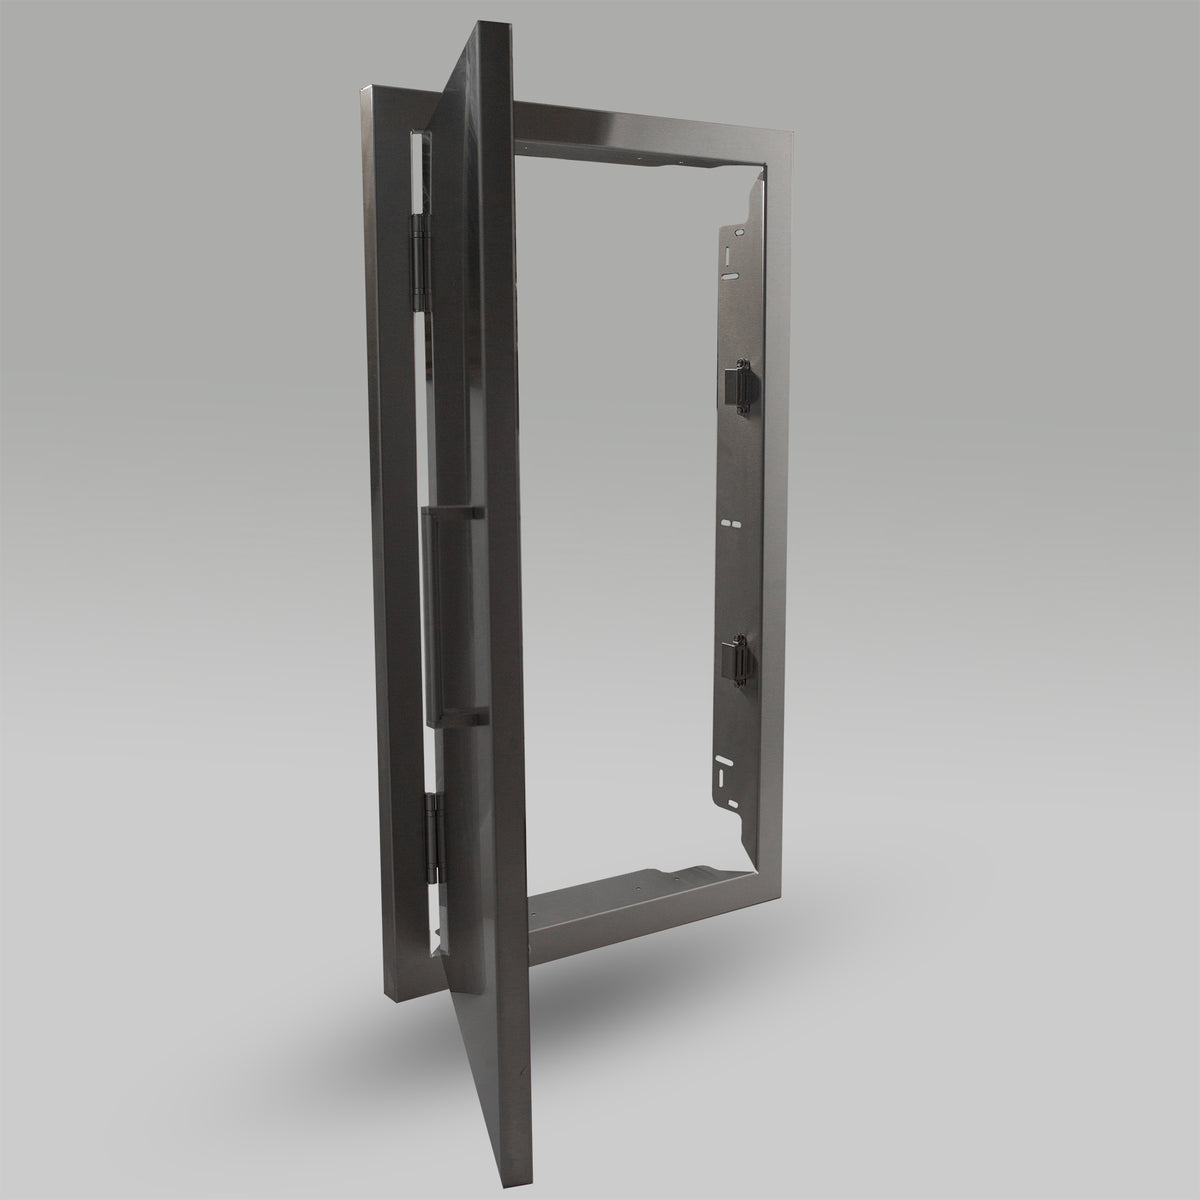 Draco Grills Stainless Steel Build-in Outdoor Kitchen Single Tall Door